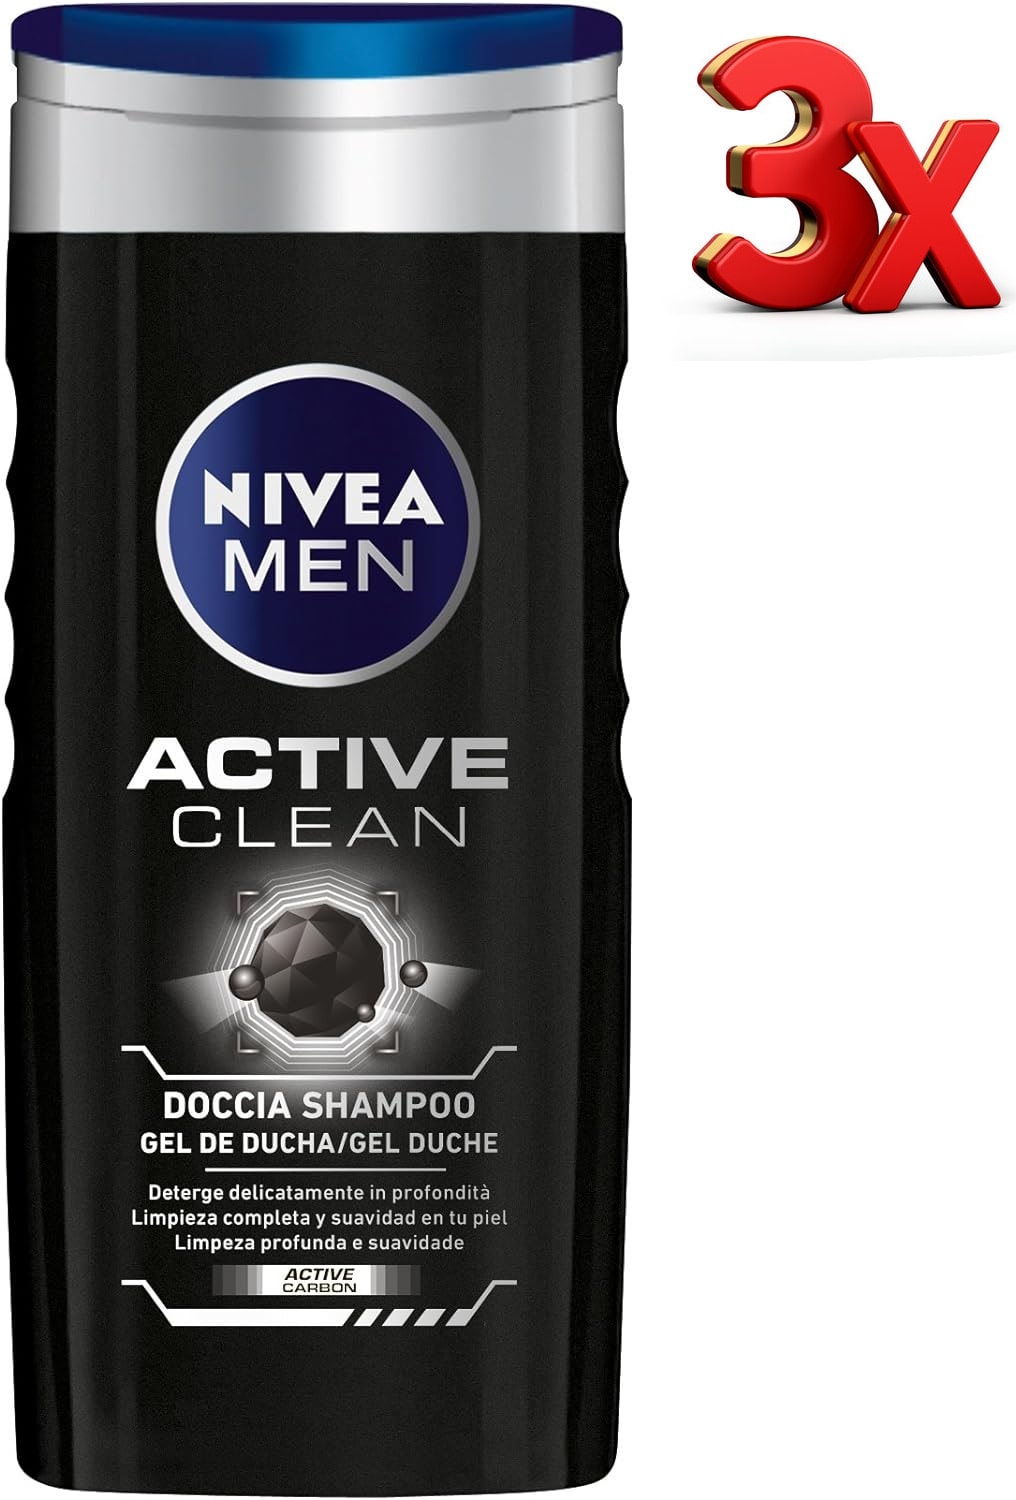 3x Nivea Doccia Men Active Clean 250Ml Doccia Shampoo Gel Doccia Uomo 08414.